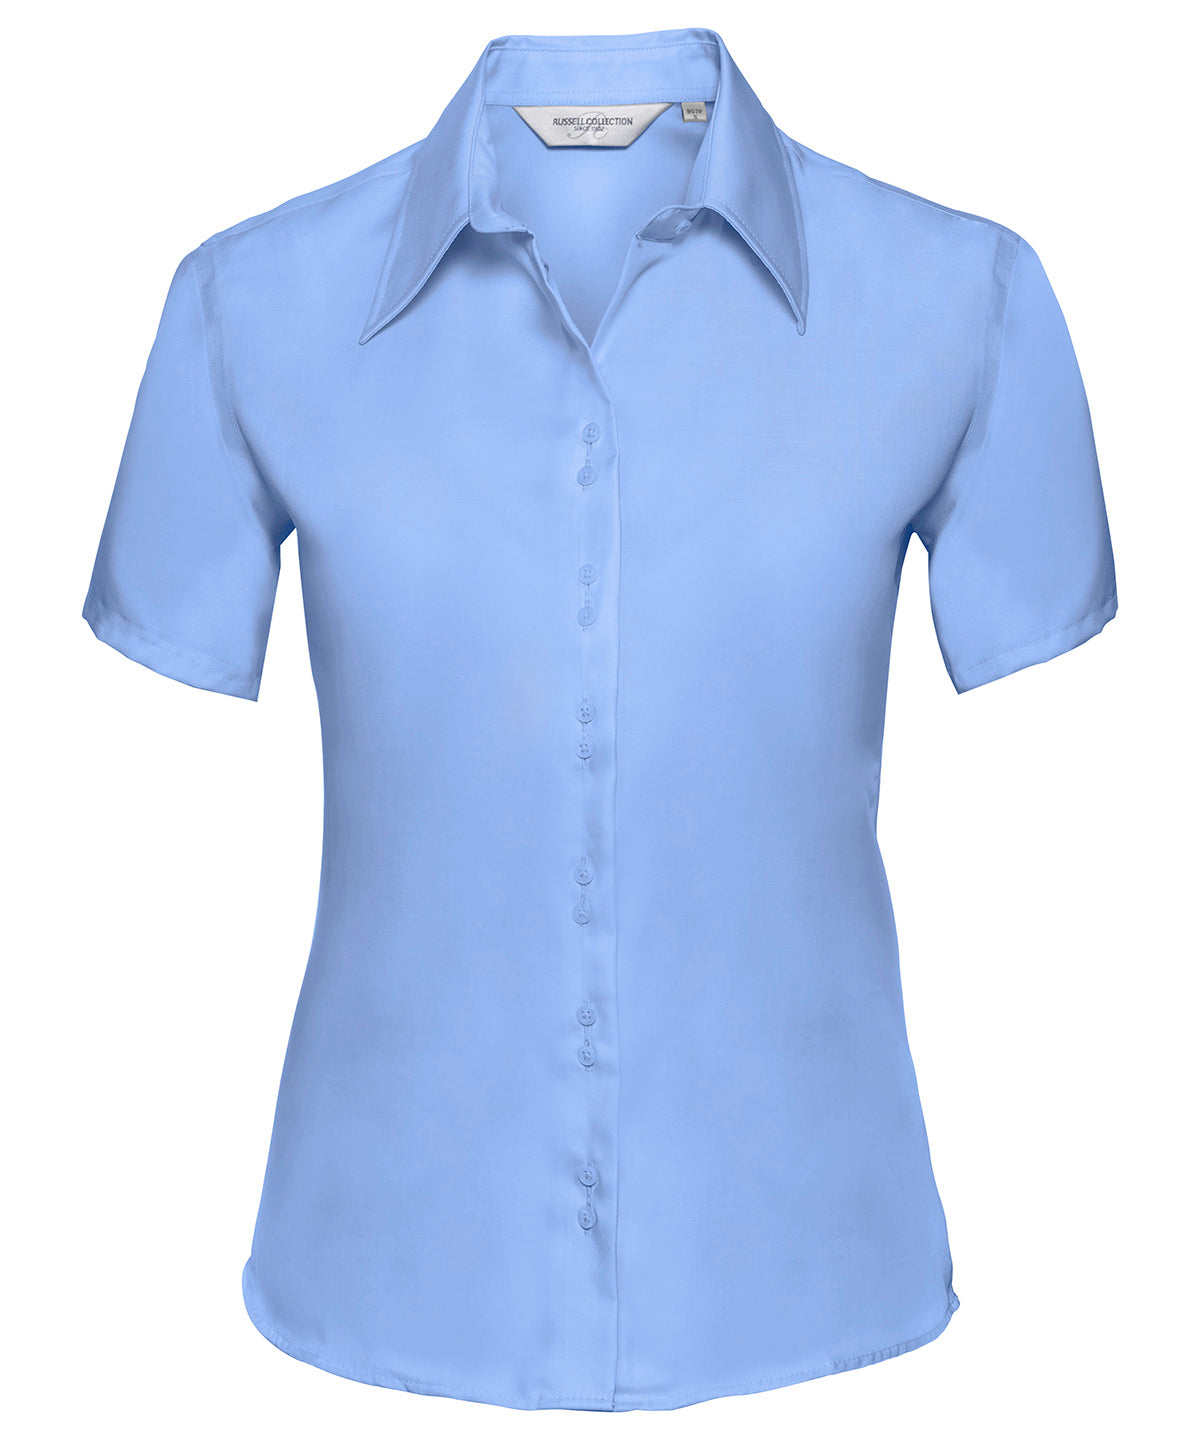 Bolir - Women's Short Sleeve Ultimate Non-iron Shirt